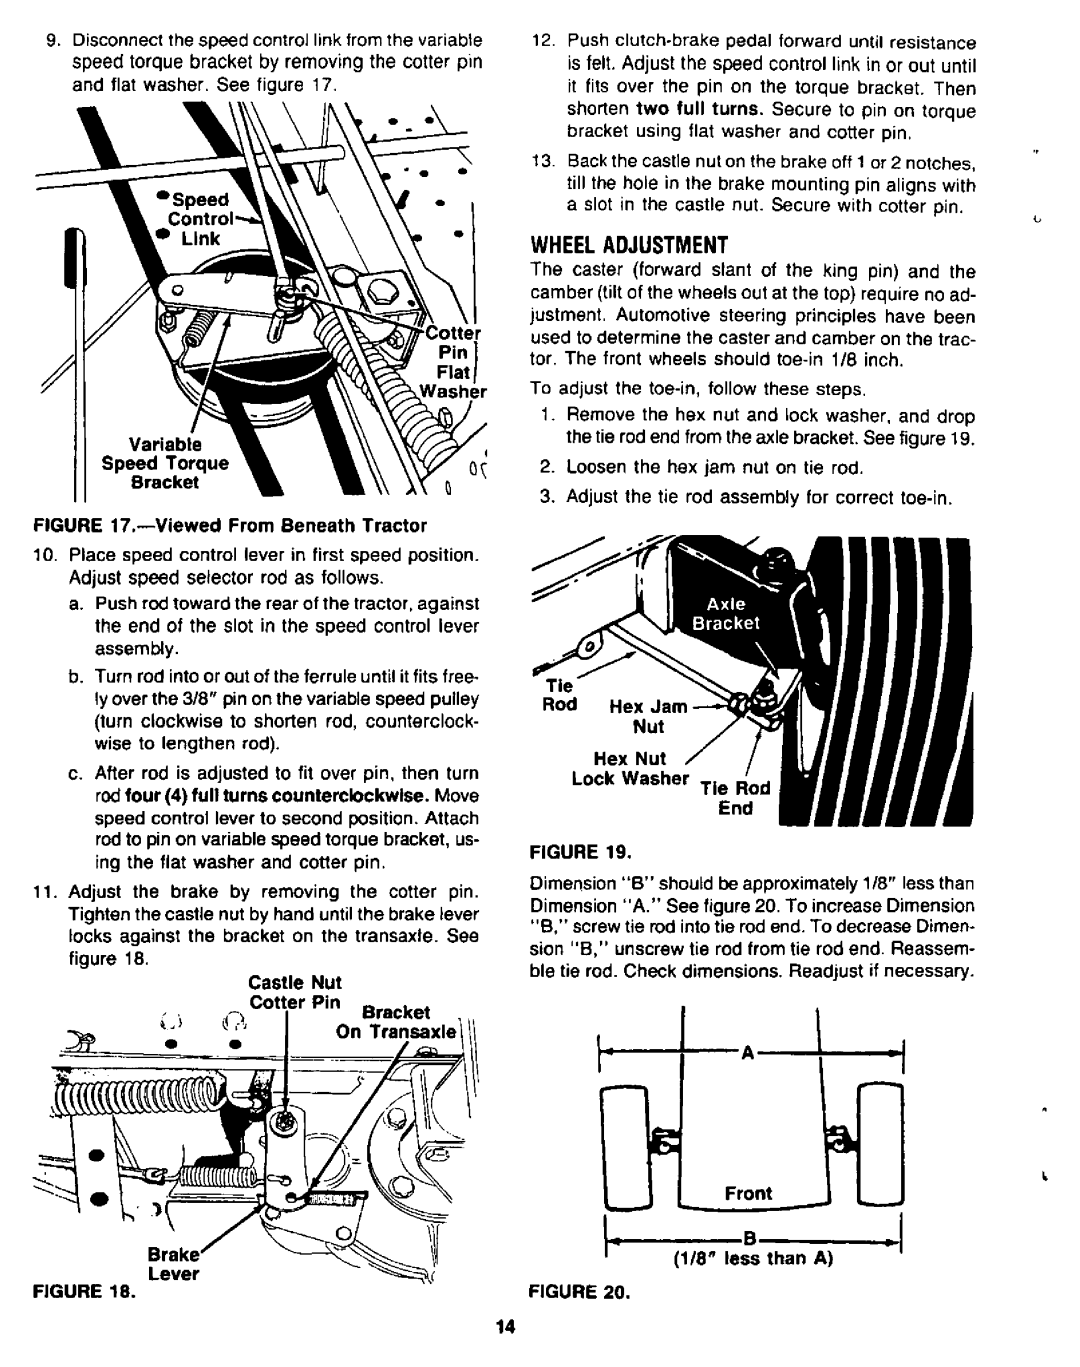 Yard-Man 130754F manual 